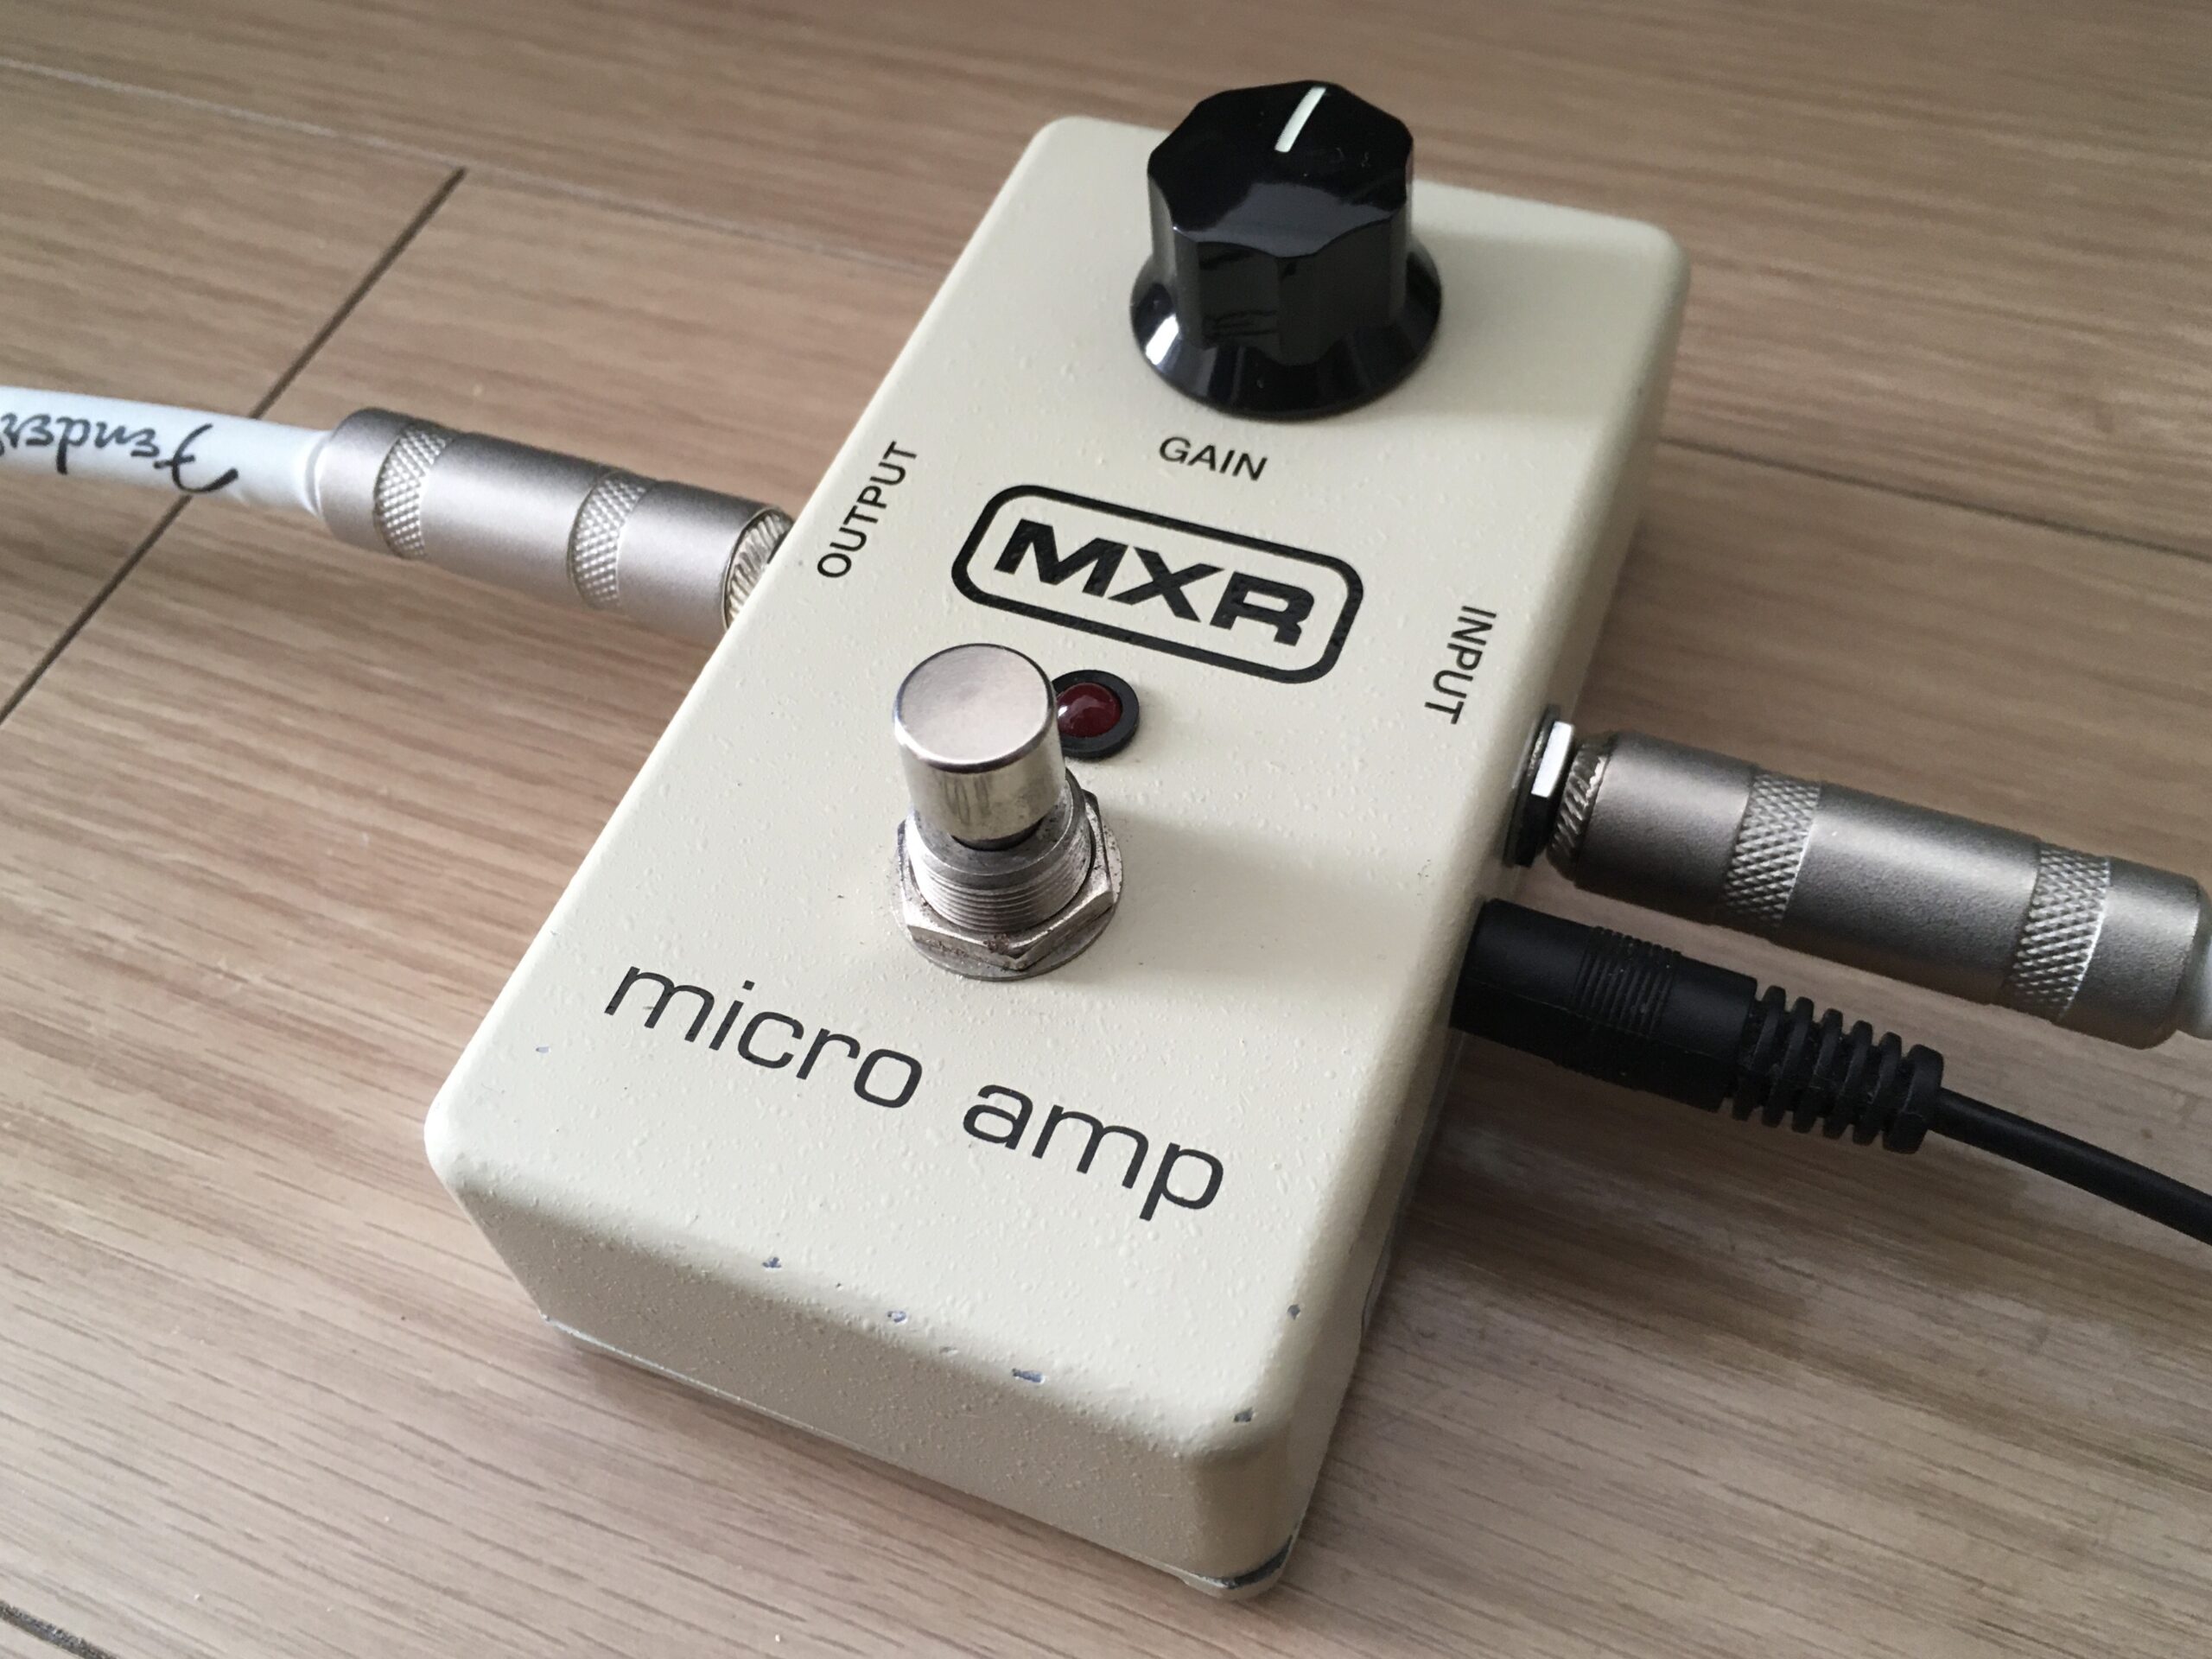 MXR micro amp